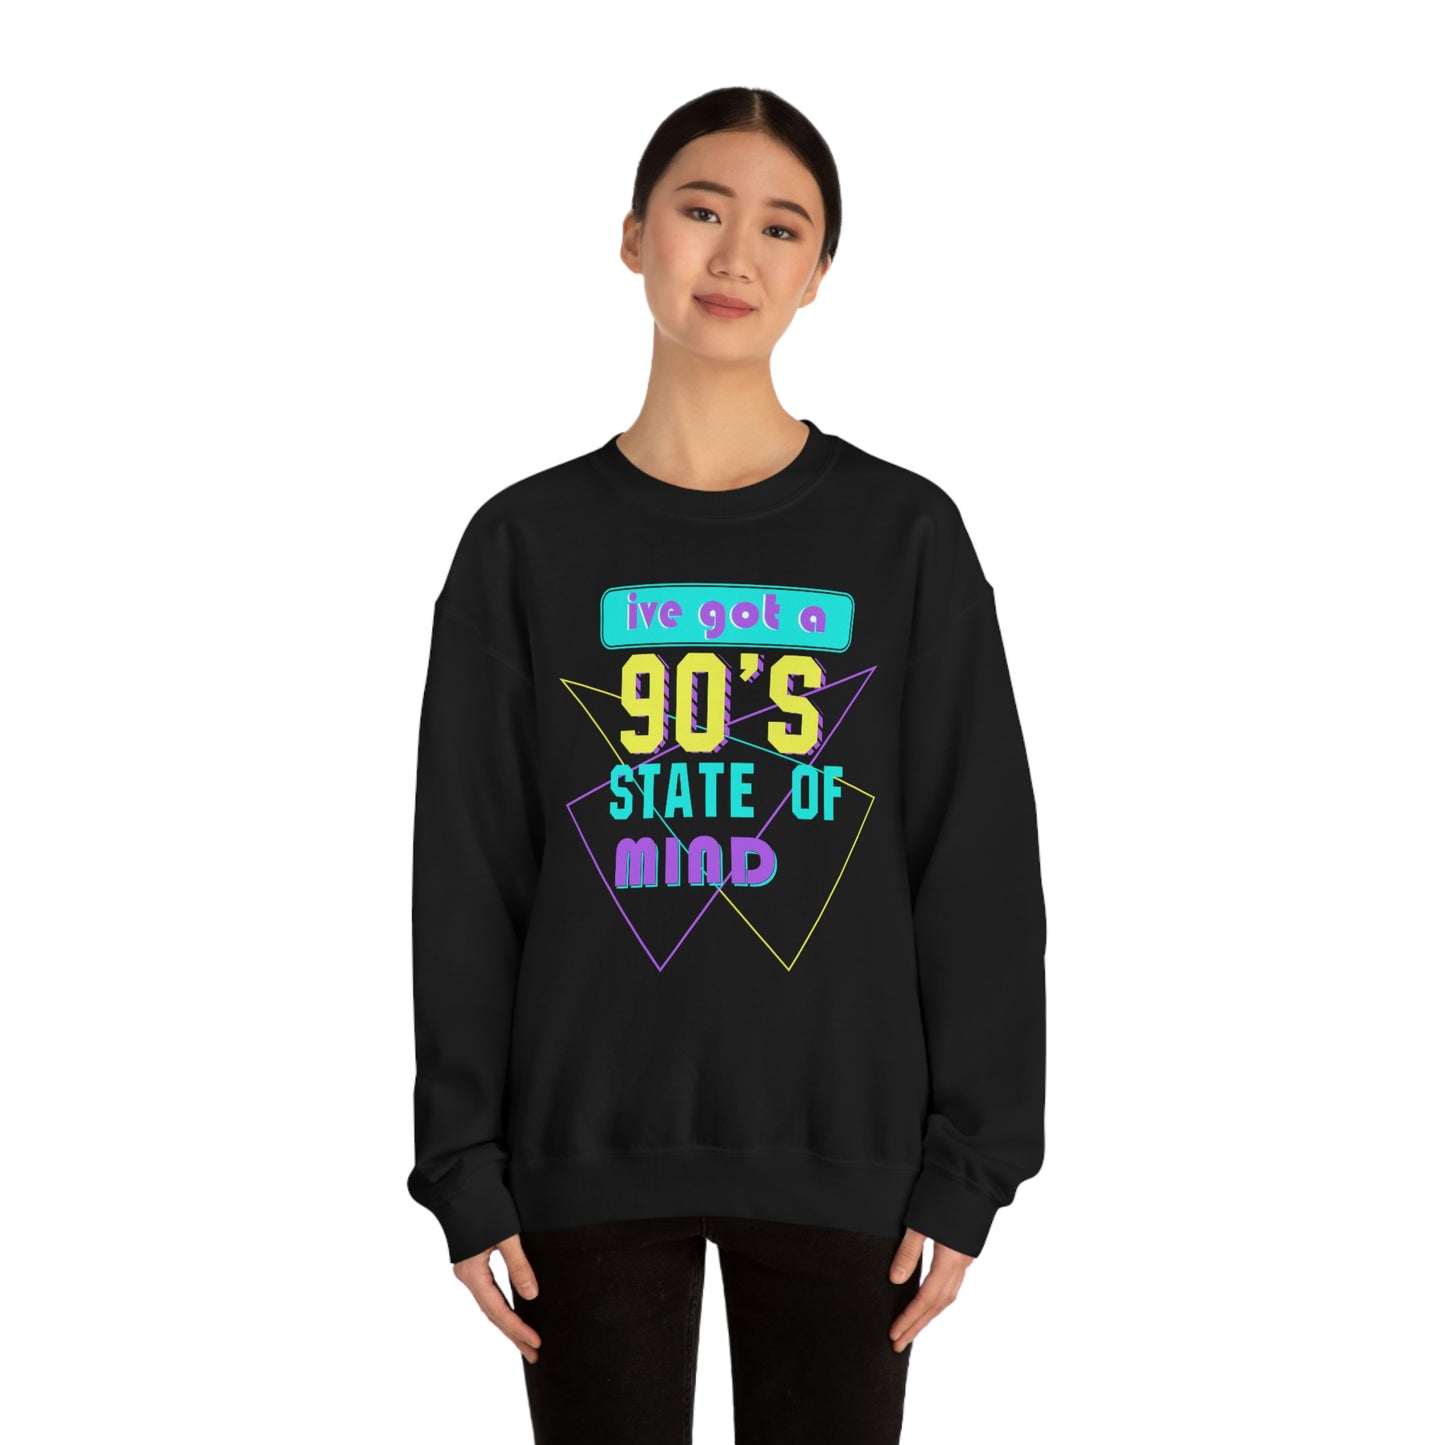 90's State of Mind Crewneck Sweatshirt, Y2k Streetwear Unisex Pop Culture Shirt,